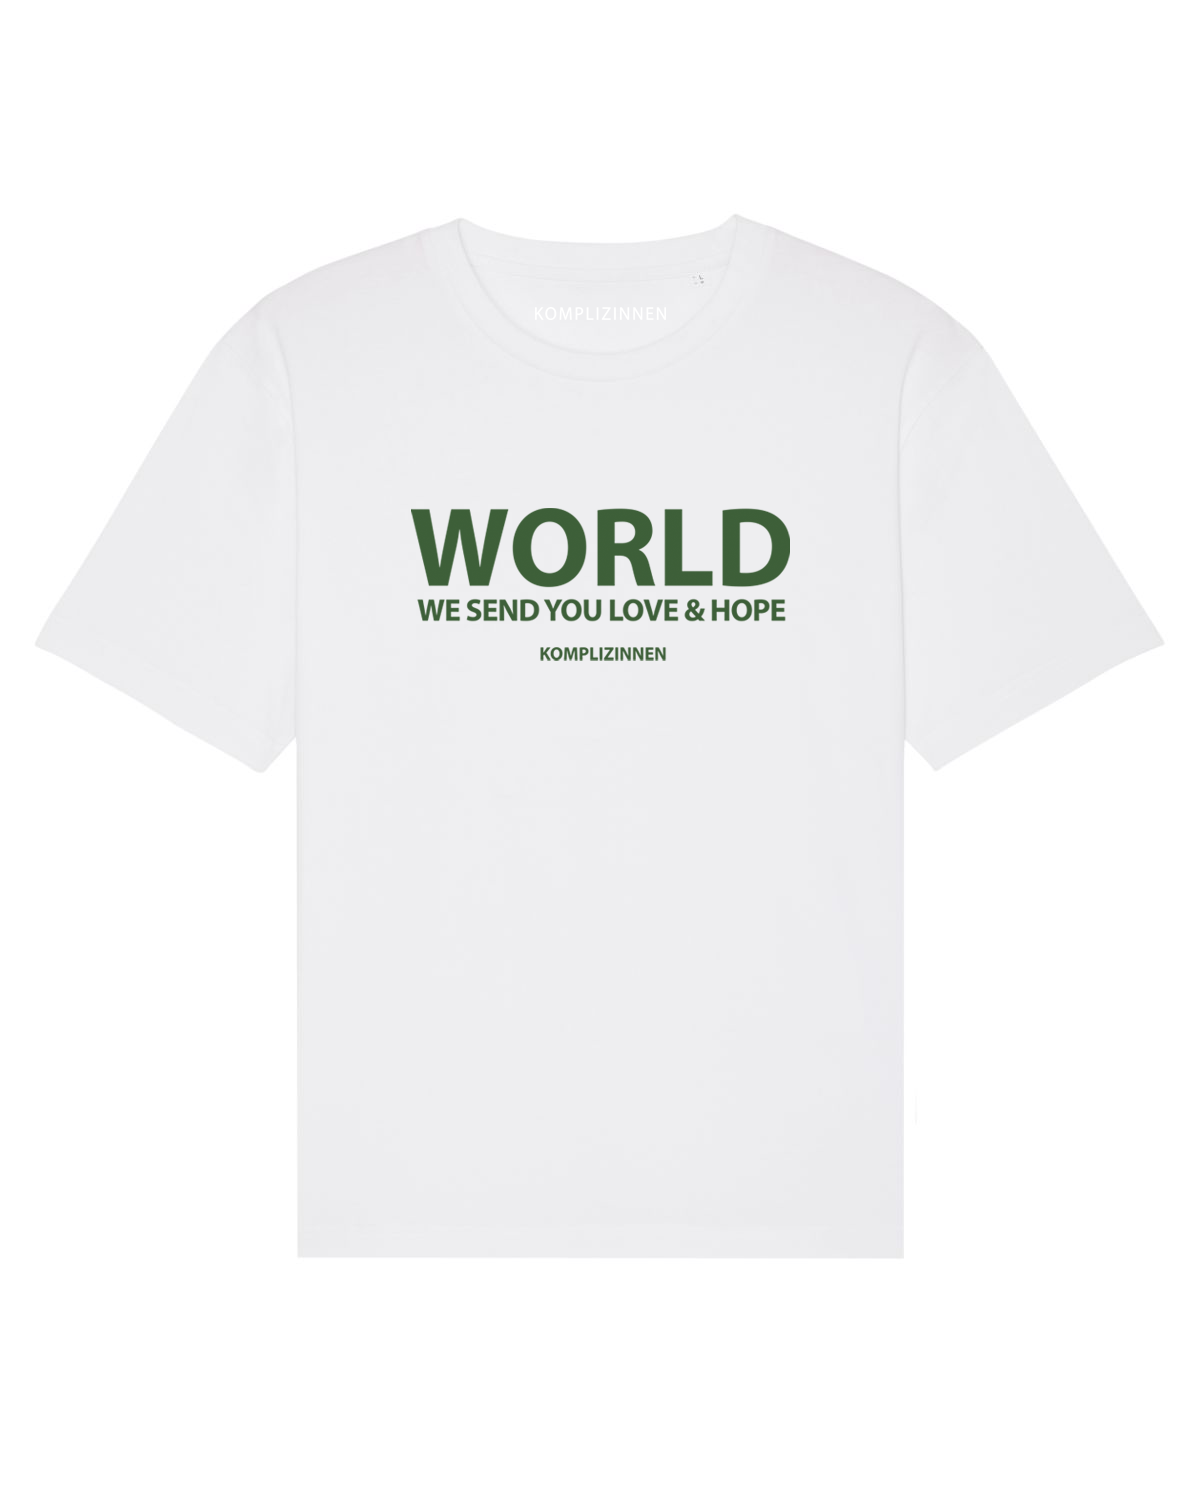 WORLD Shirt